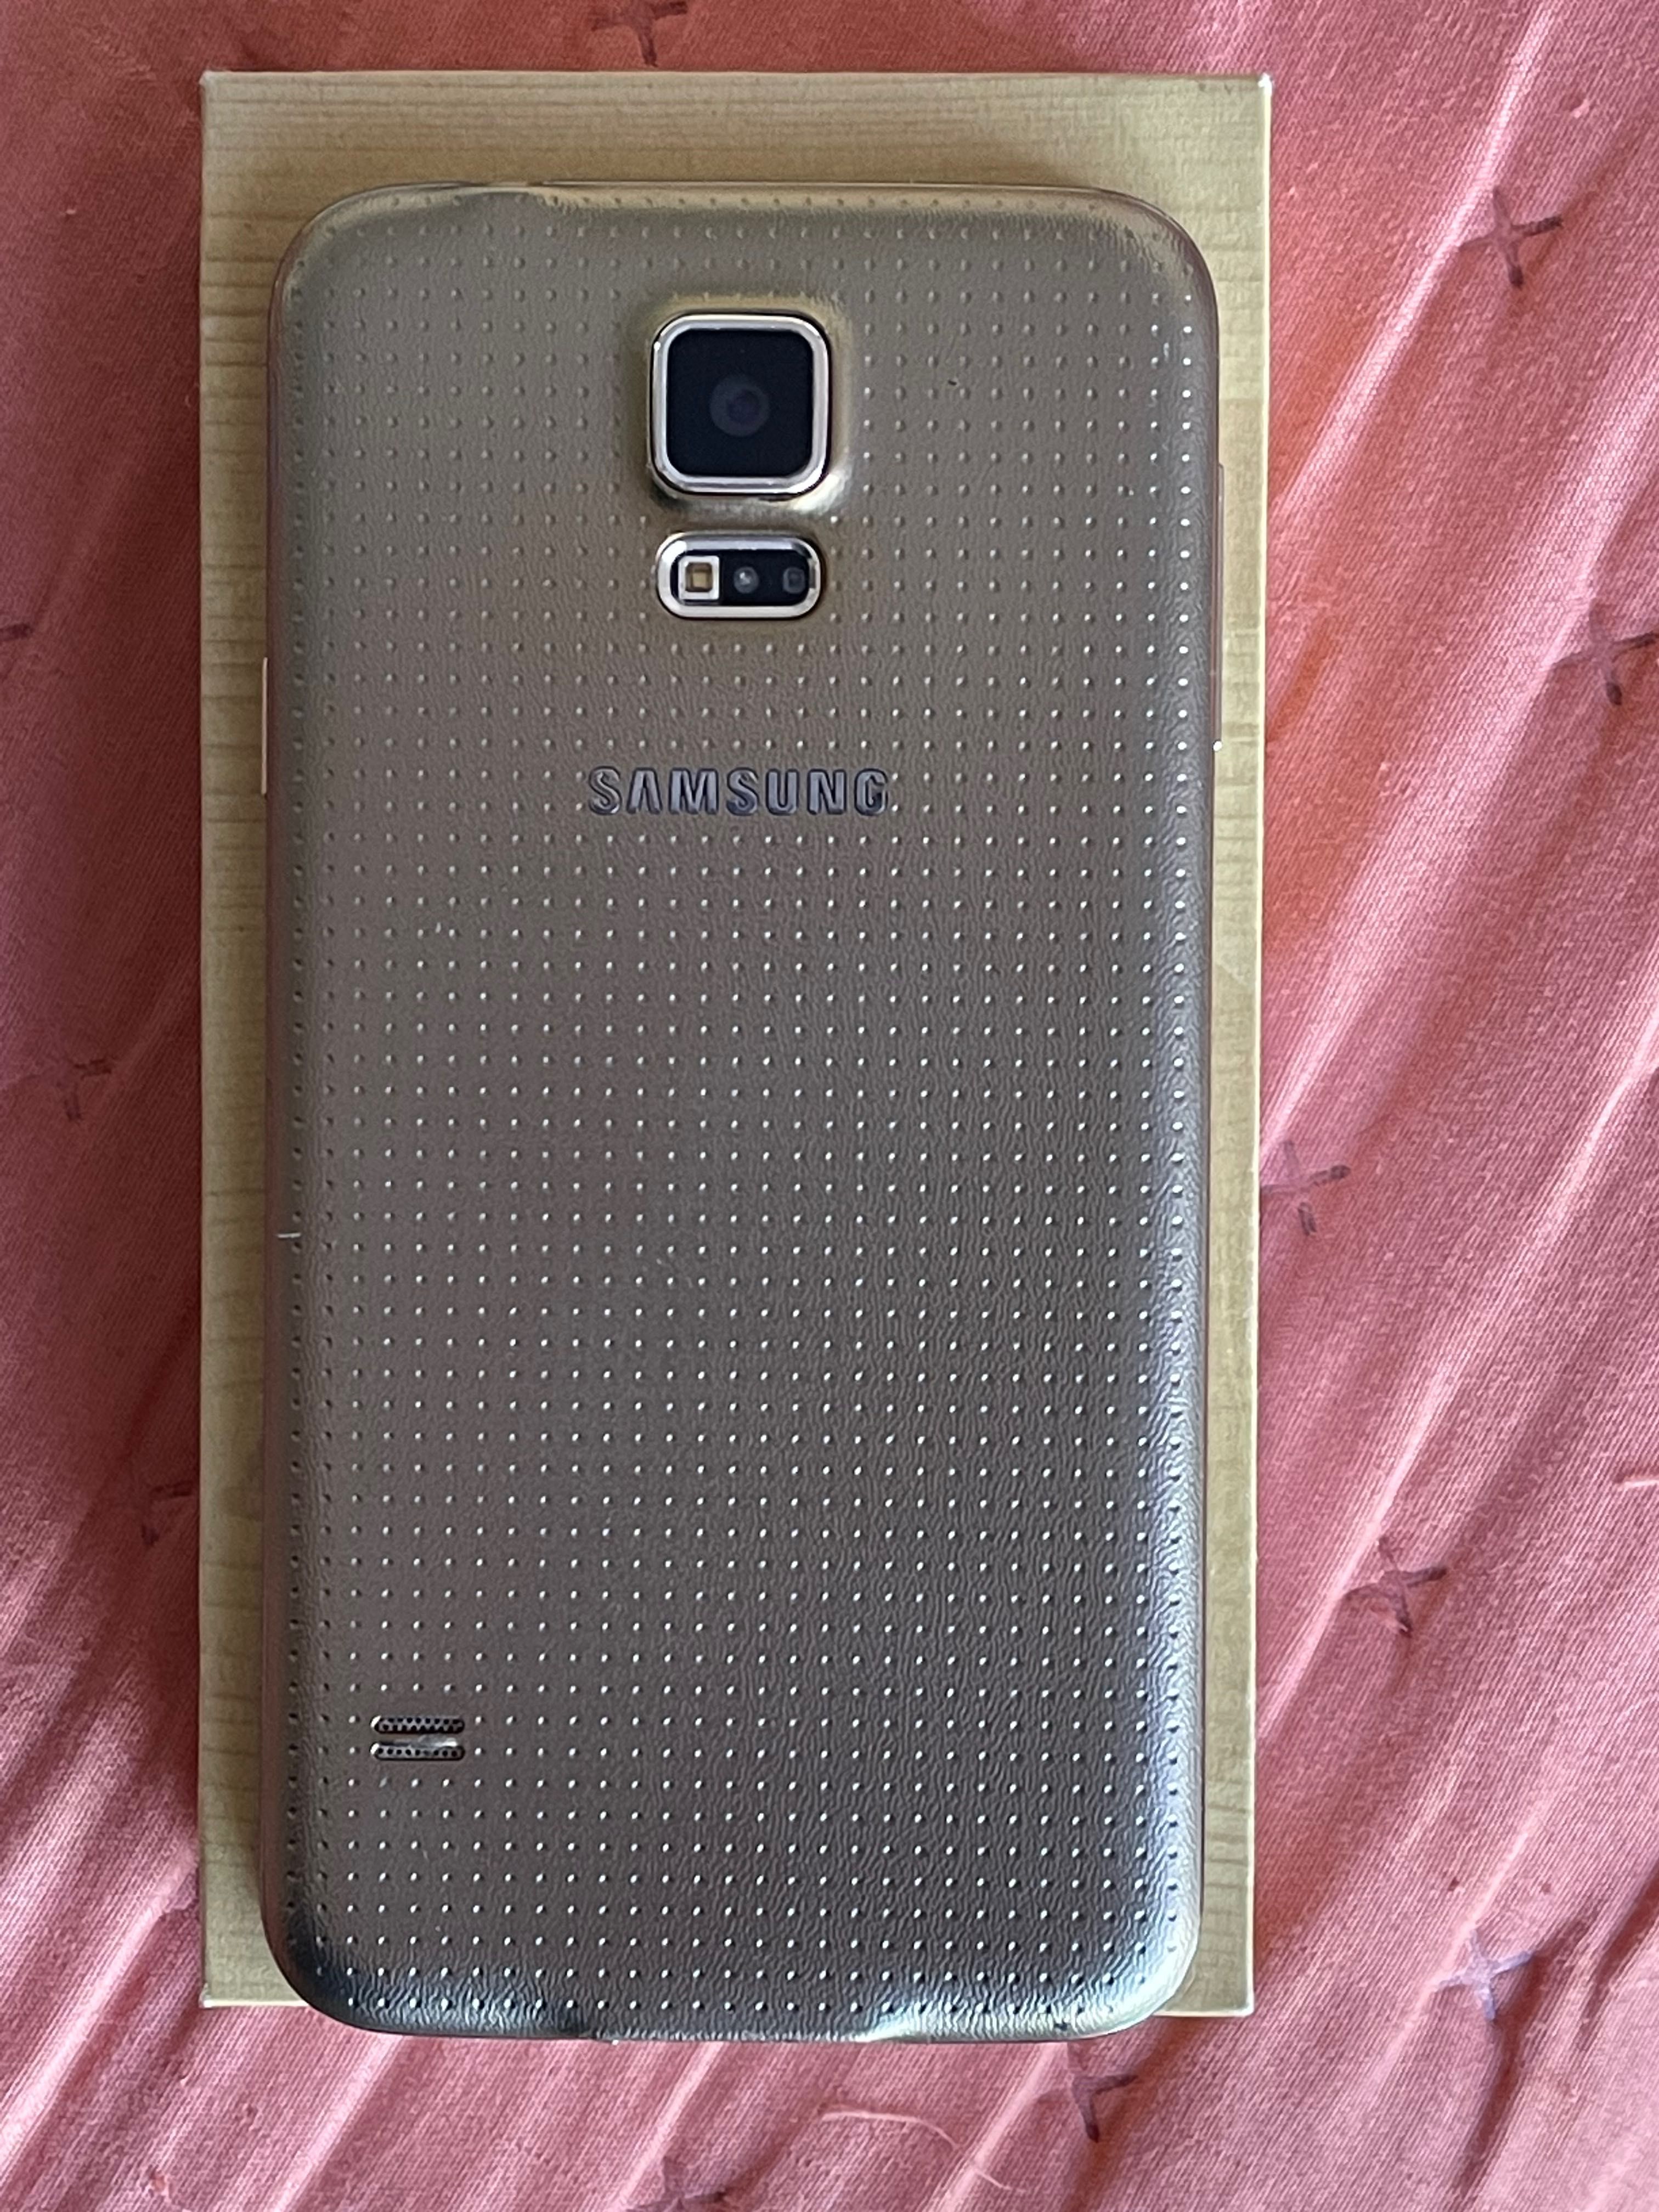 Samsung Galaxy S 5 - SM-G900F “Dourado”